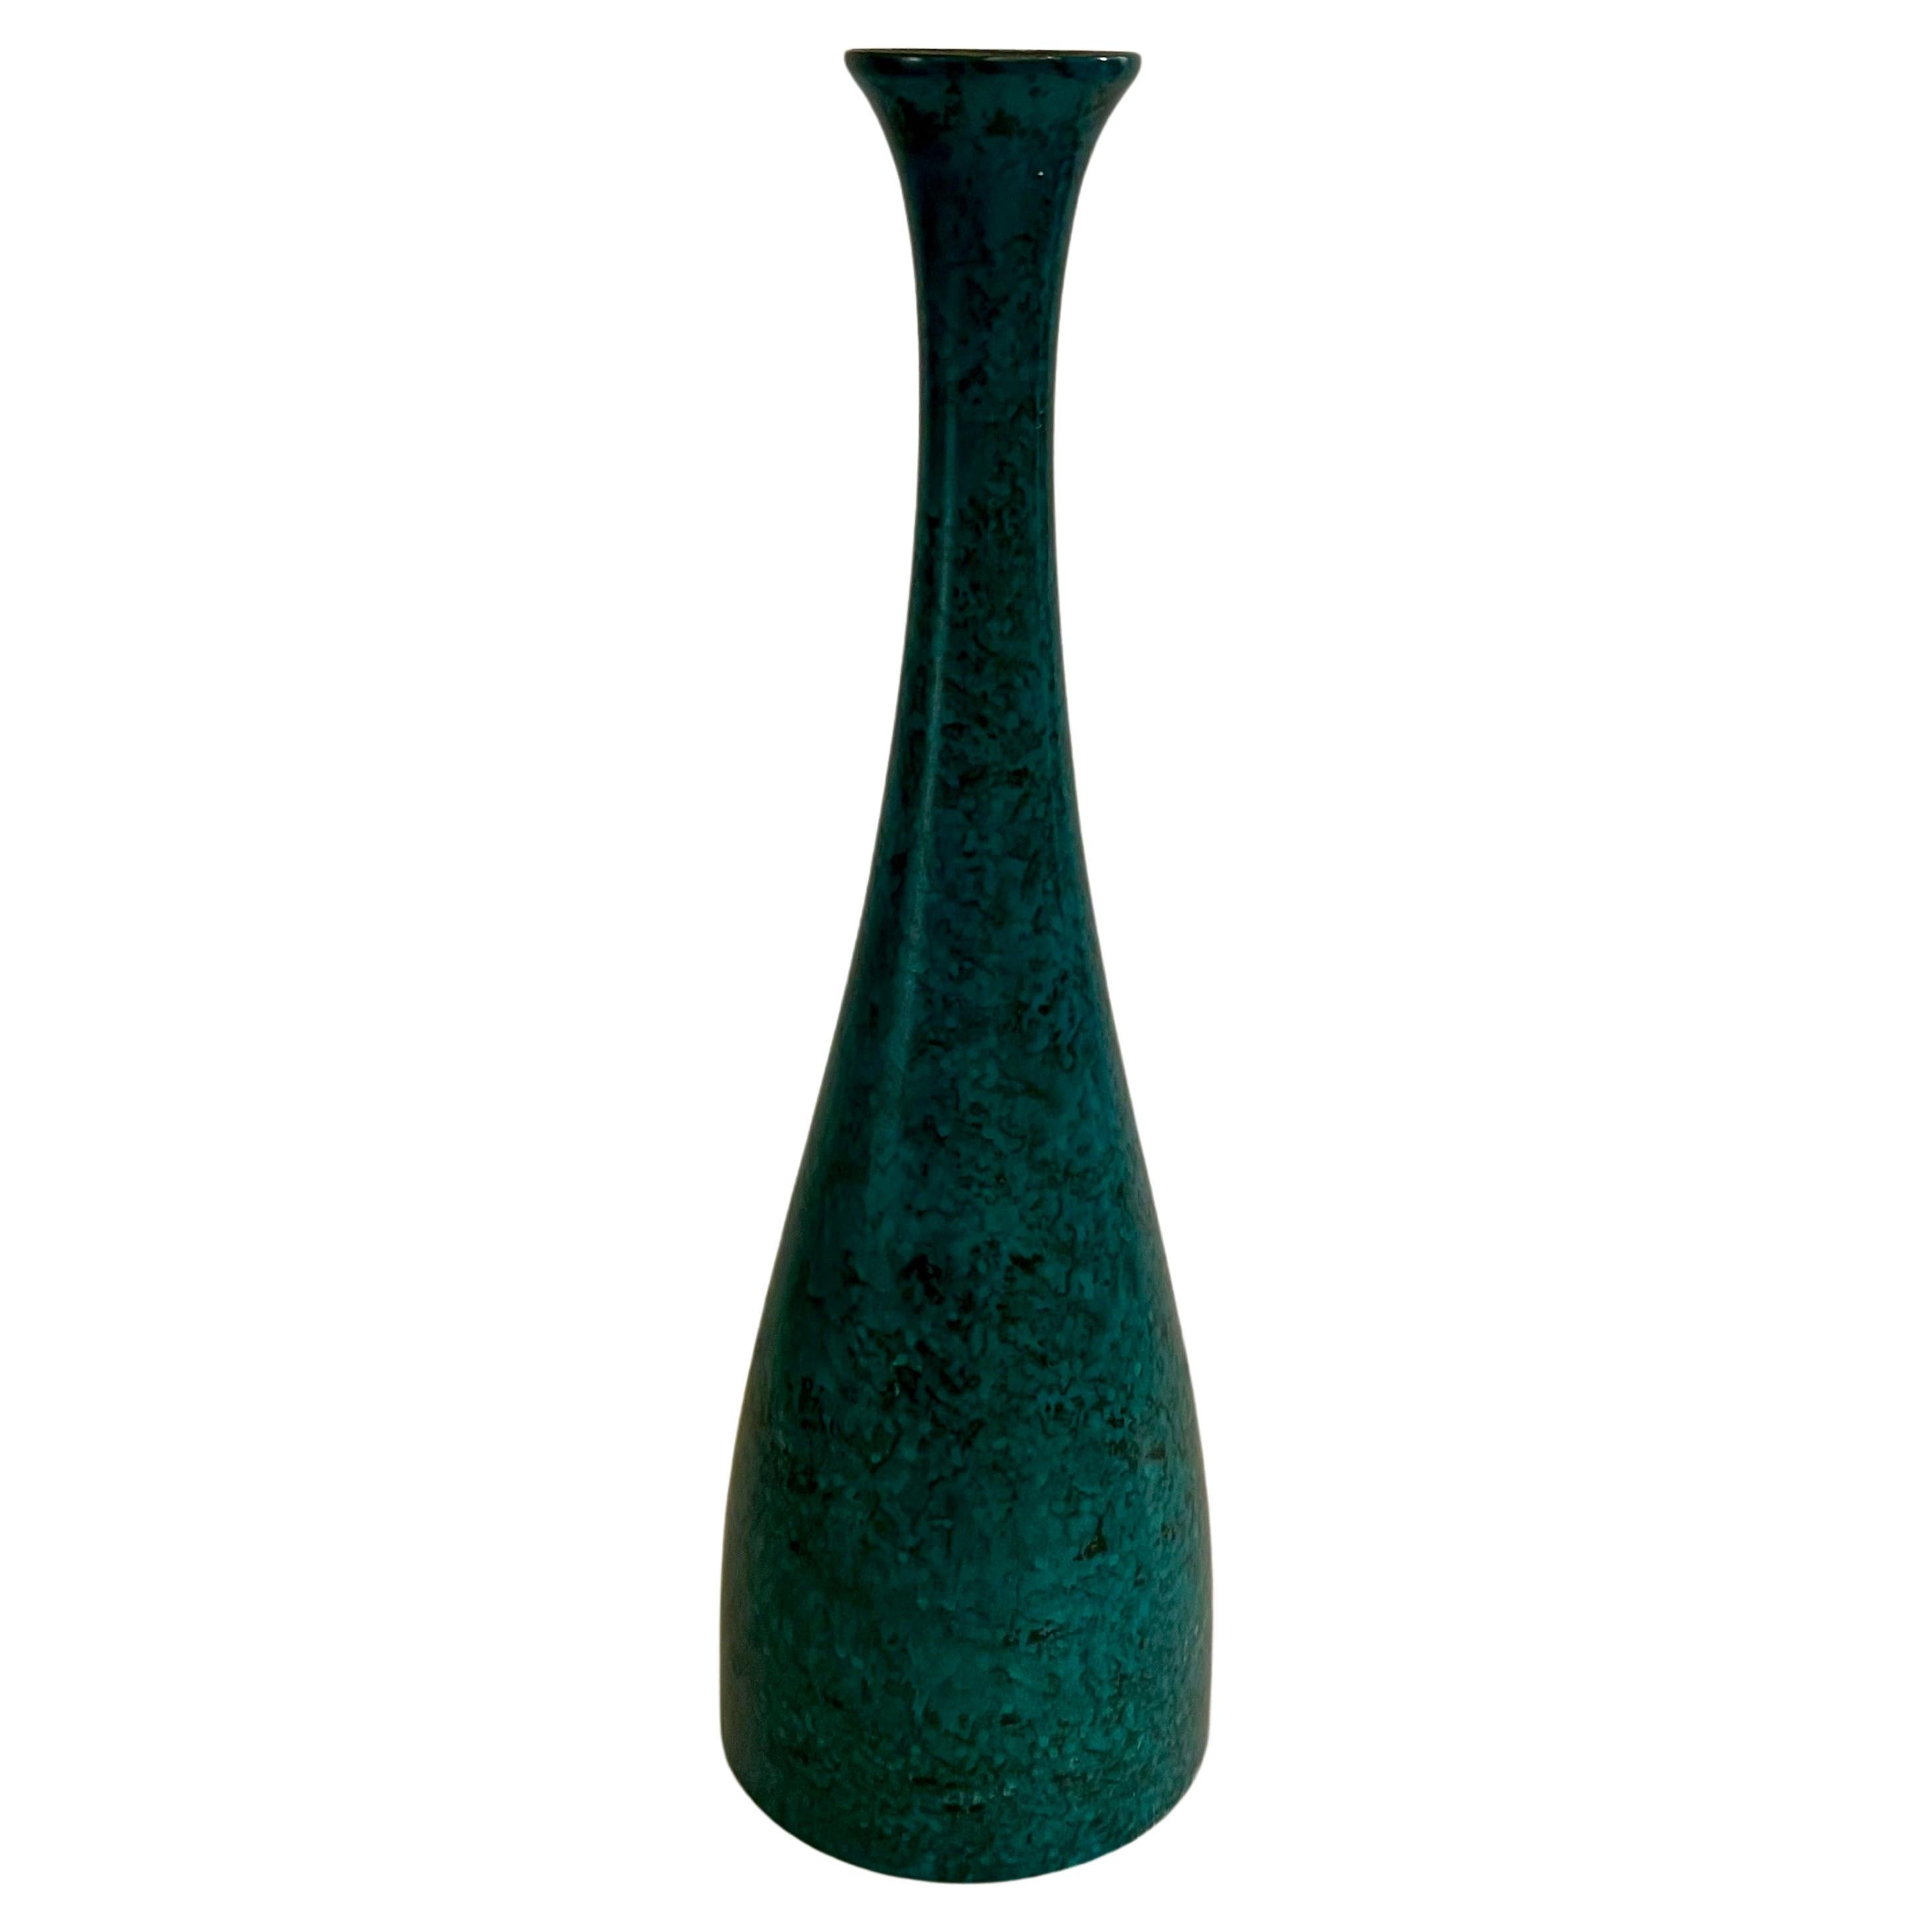 Patinated Bronze Finish on Metal Bud Vase Mid Century